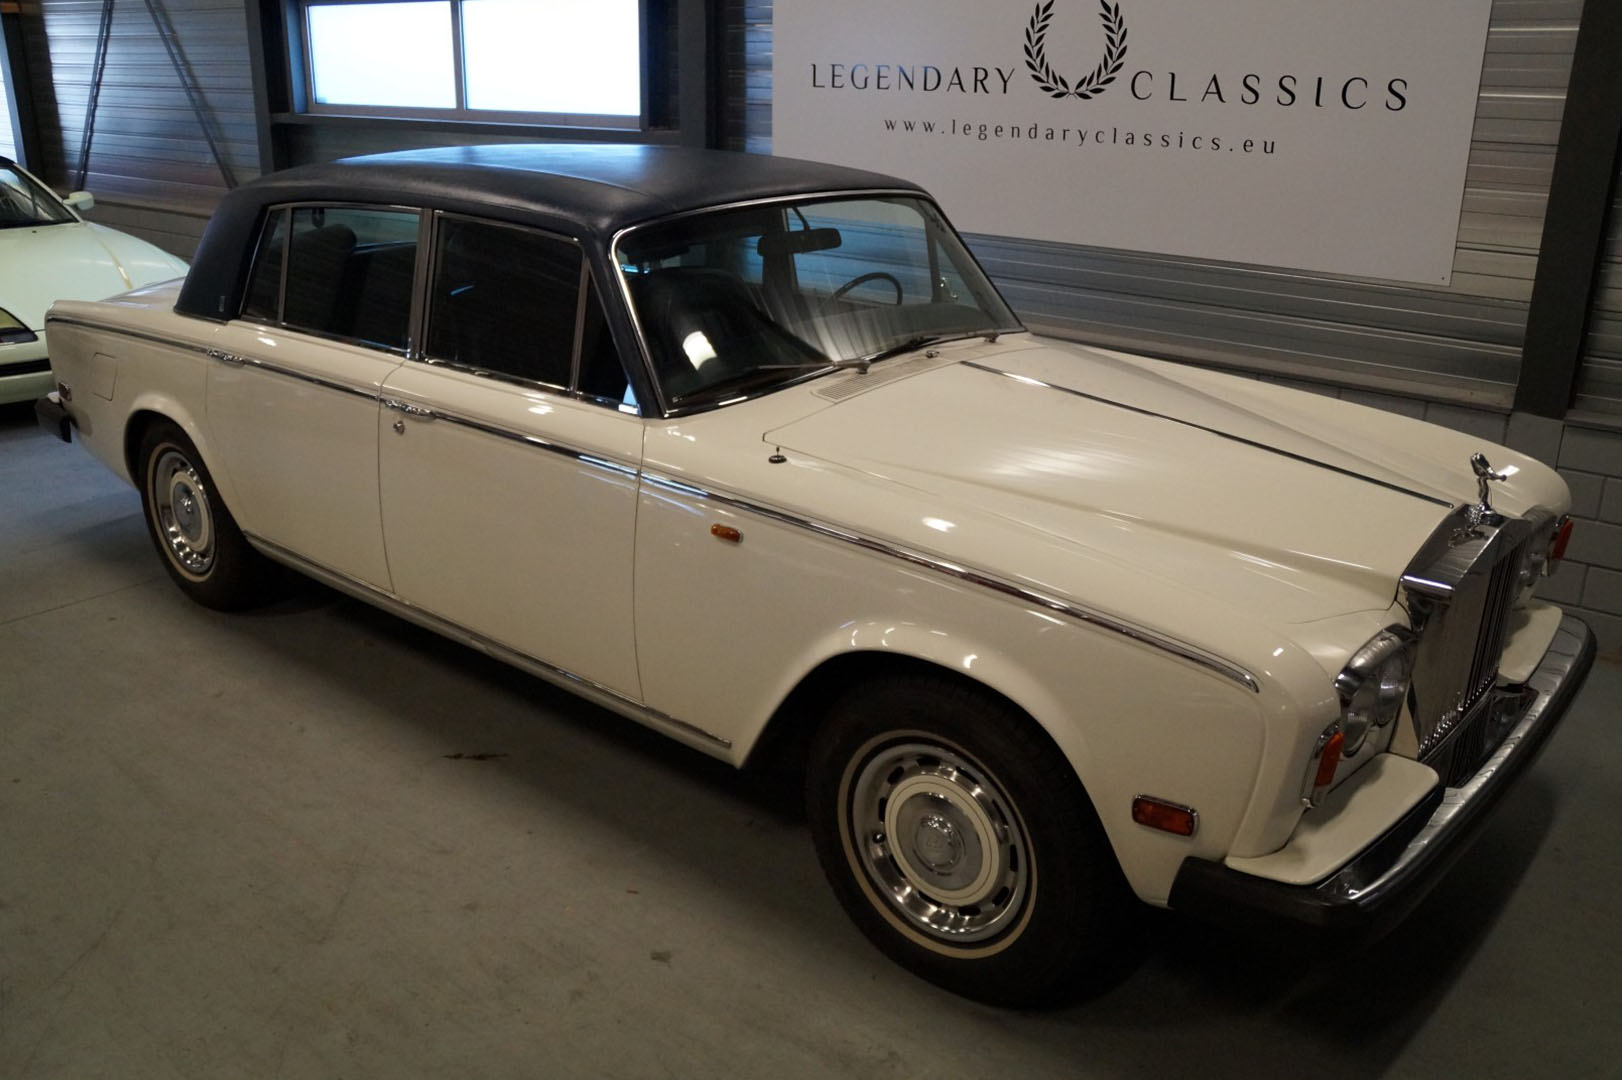 Buy this Rolls Royce   at Legendary Classics